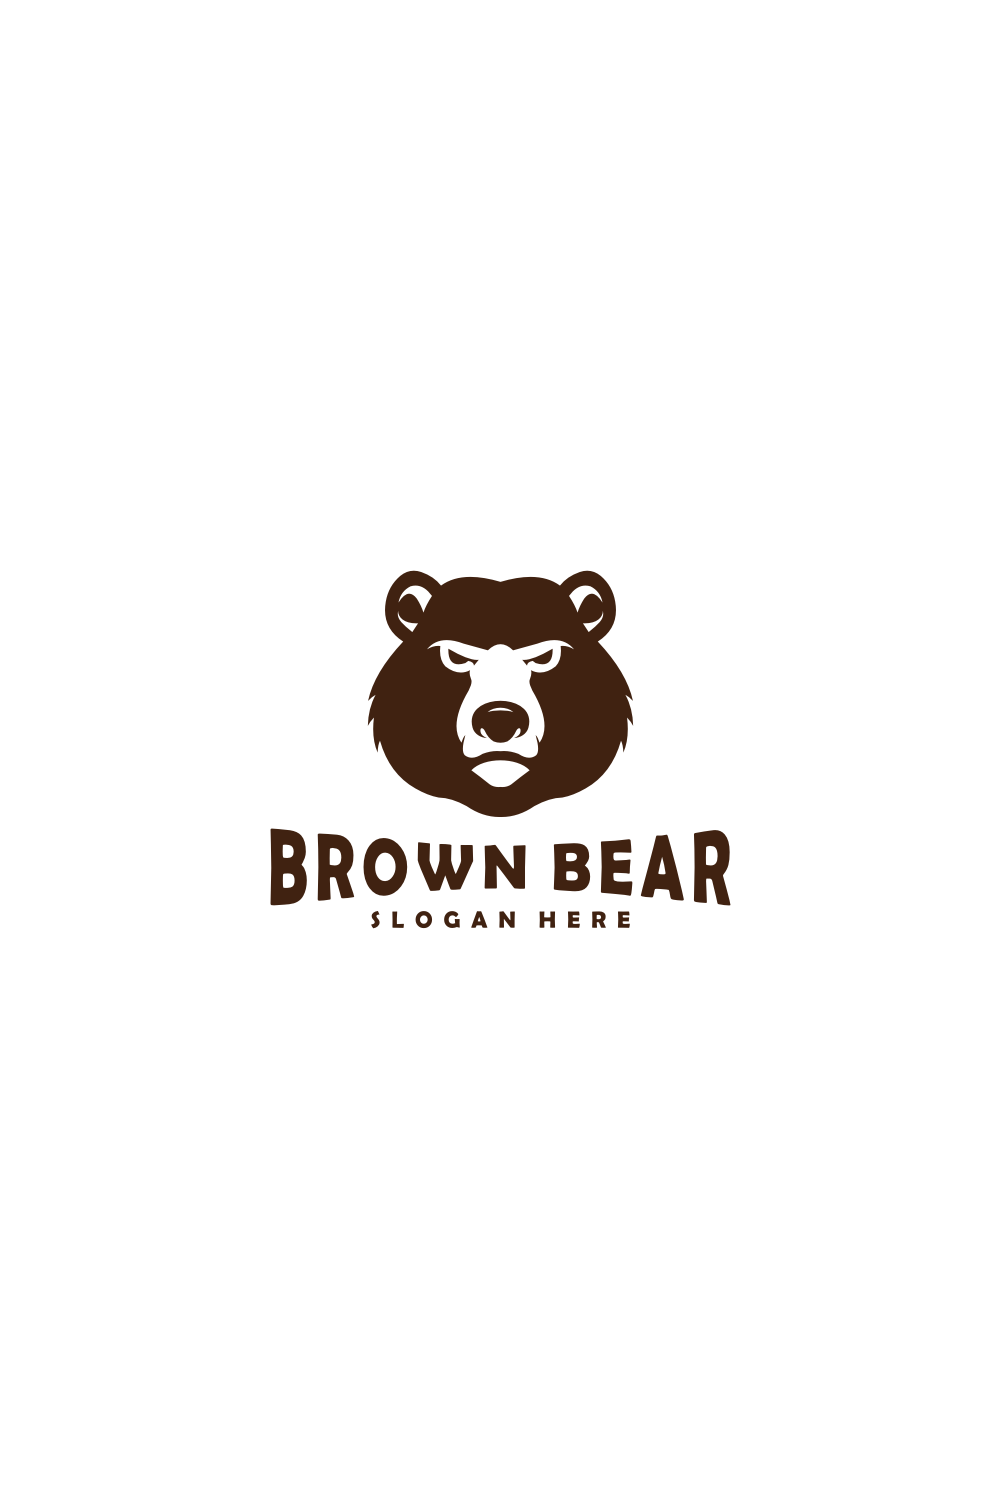 Brown Bear Head Mascot Logo Vector Designs pinterest image.